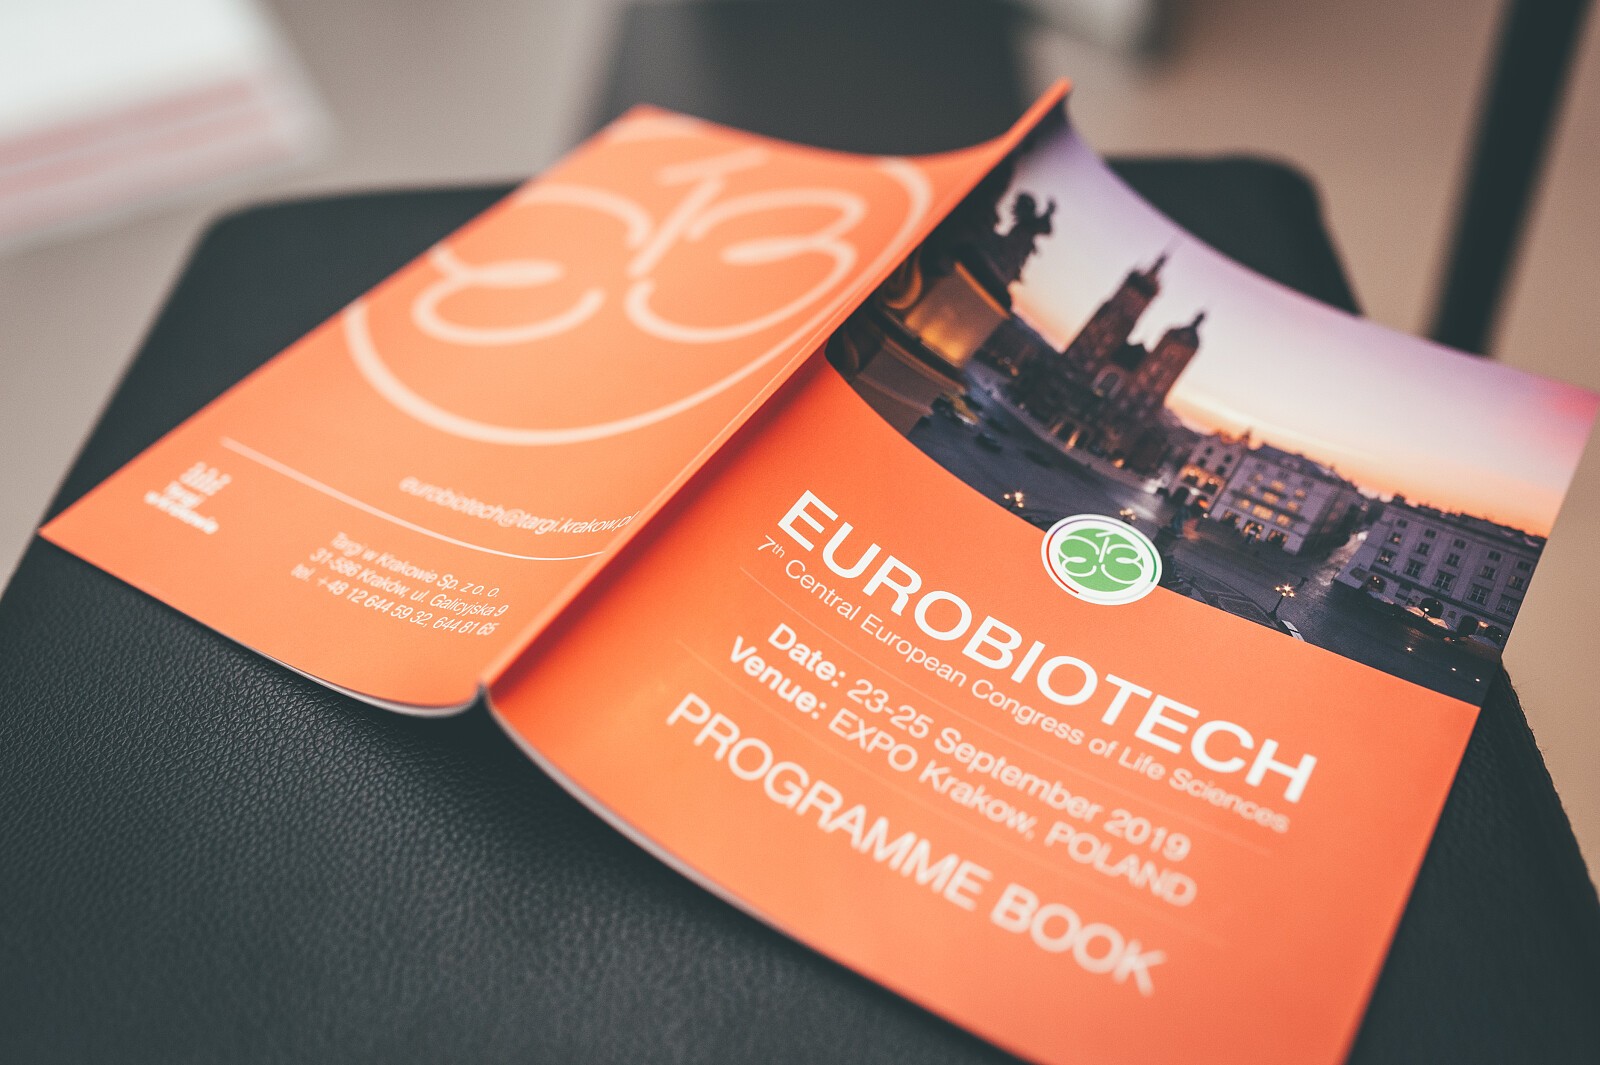 eurobiotech-2019-99.jpg [3.80 MB]